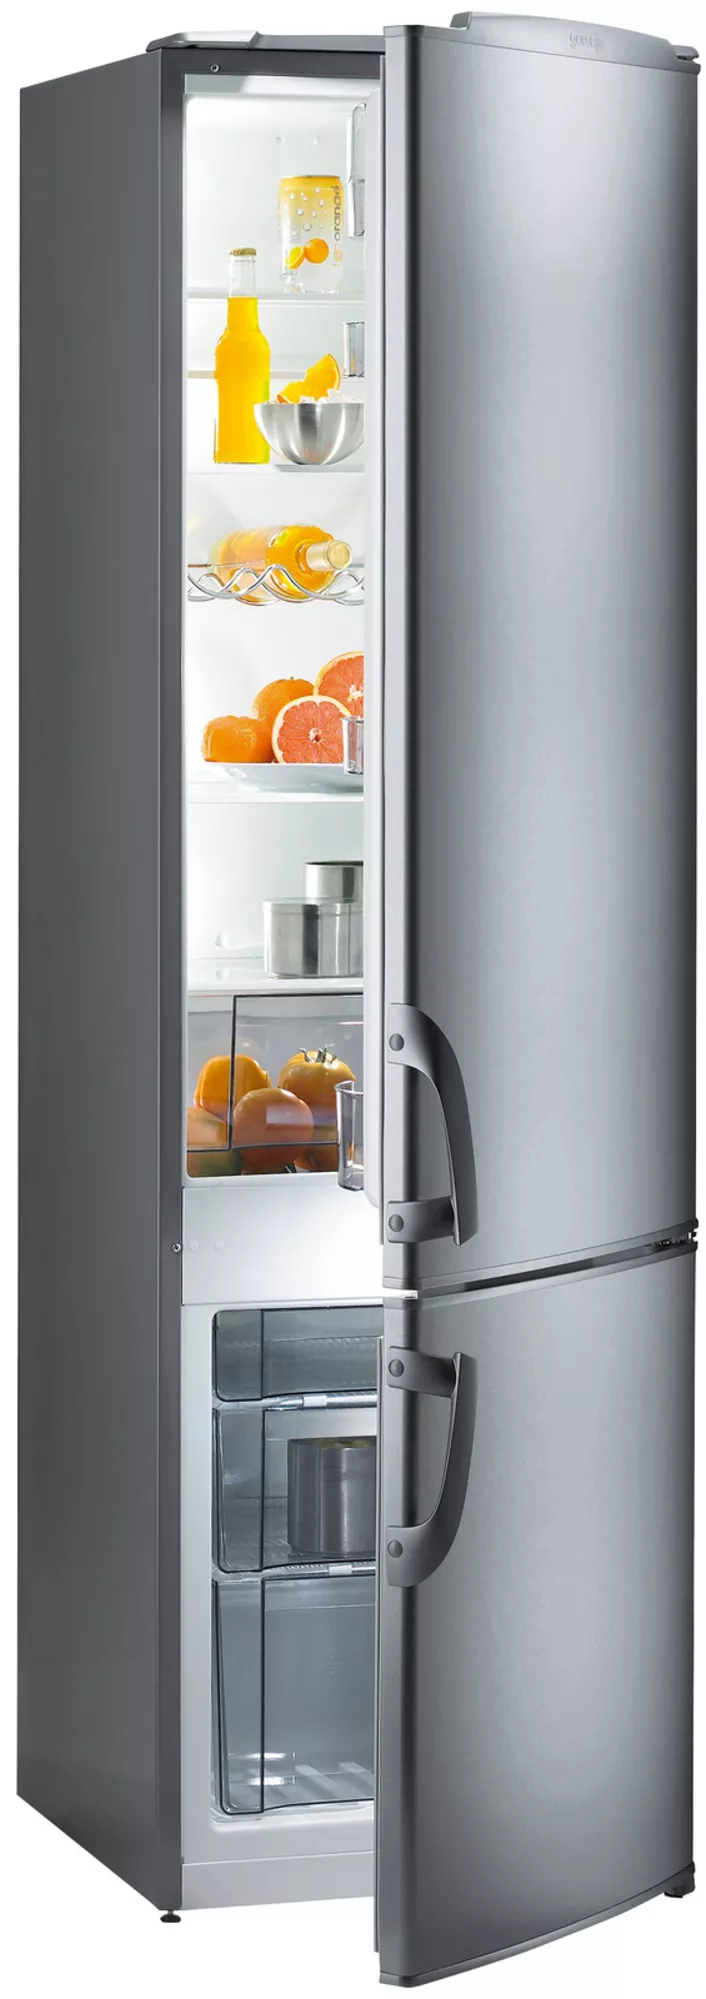 Холодильник Горенье/Горение/Gorenje RK 4200 E/RK4200E/RK 4200E Словени